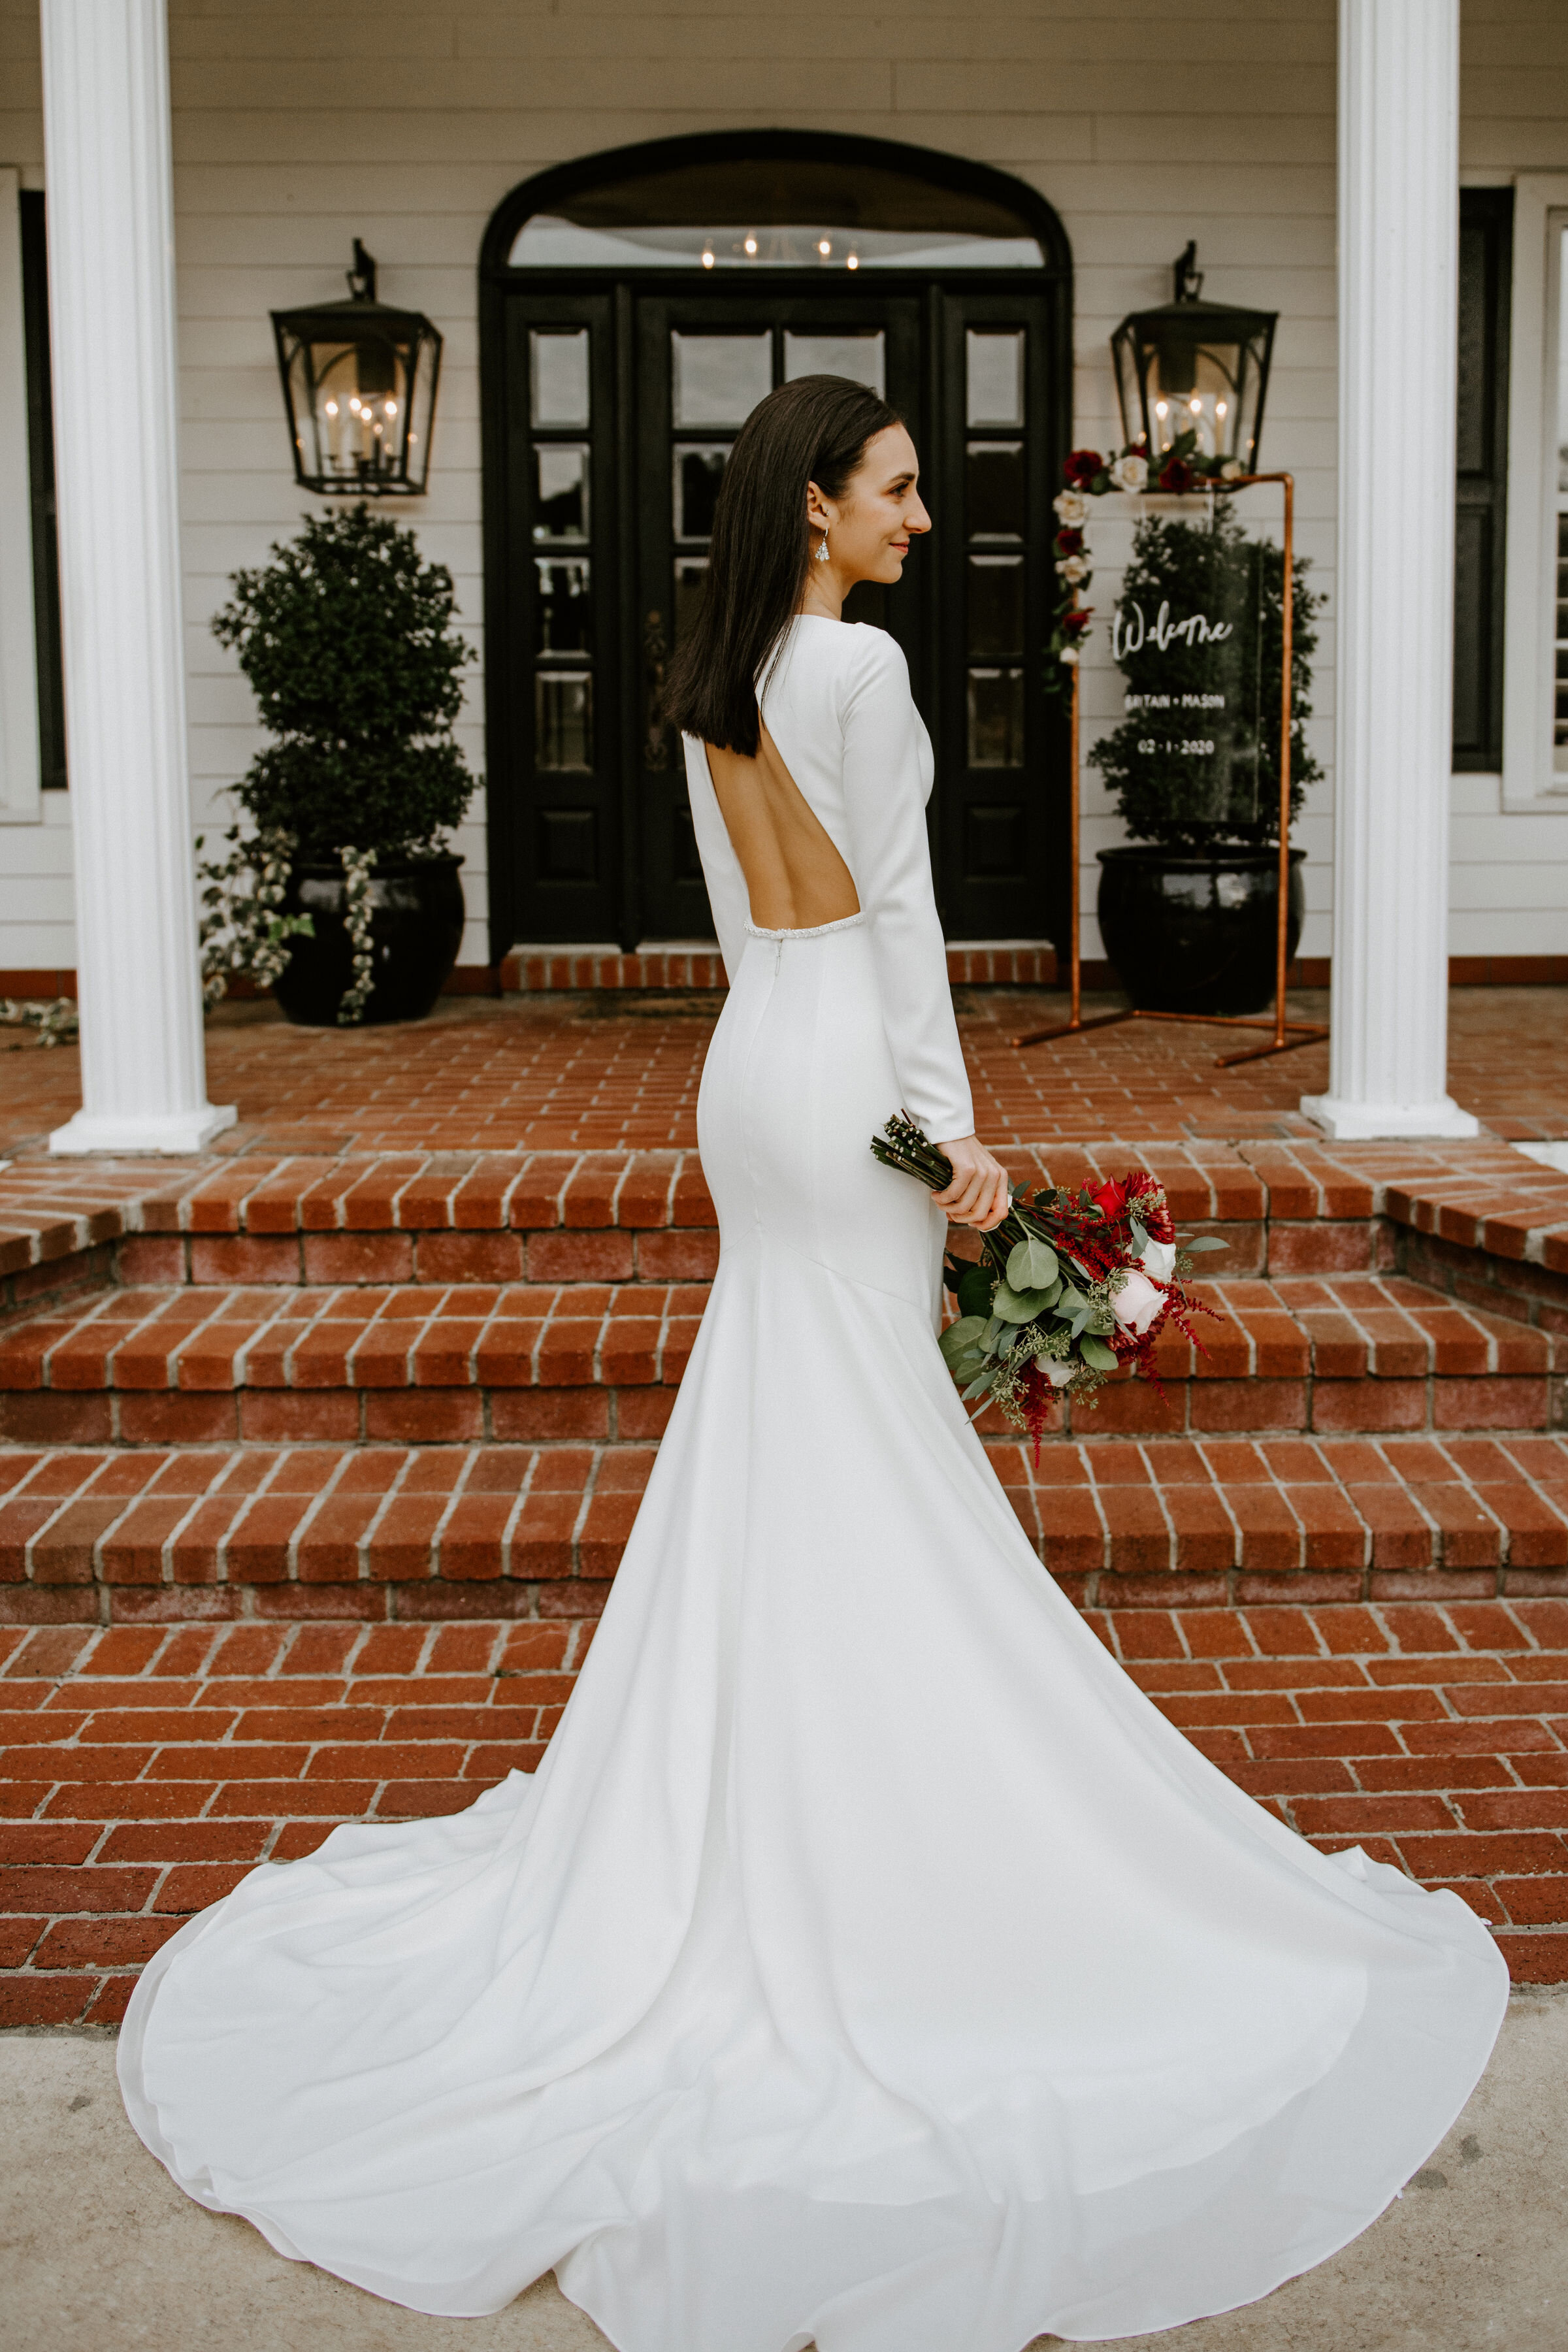 Best 23 Sparkly Wedding Dresses for a Glamorous Bride – Olivia Bottega